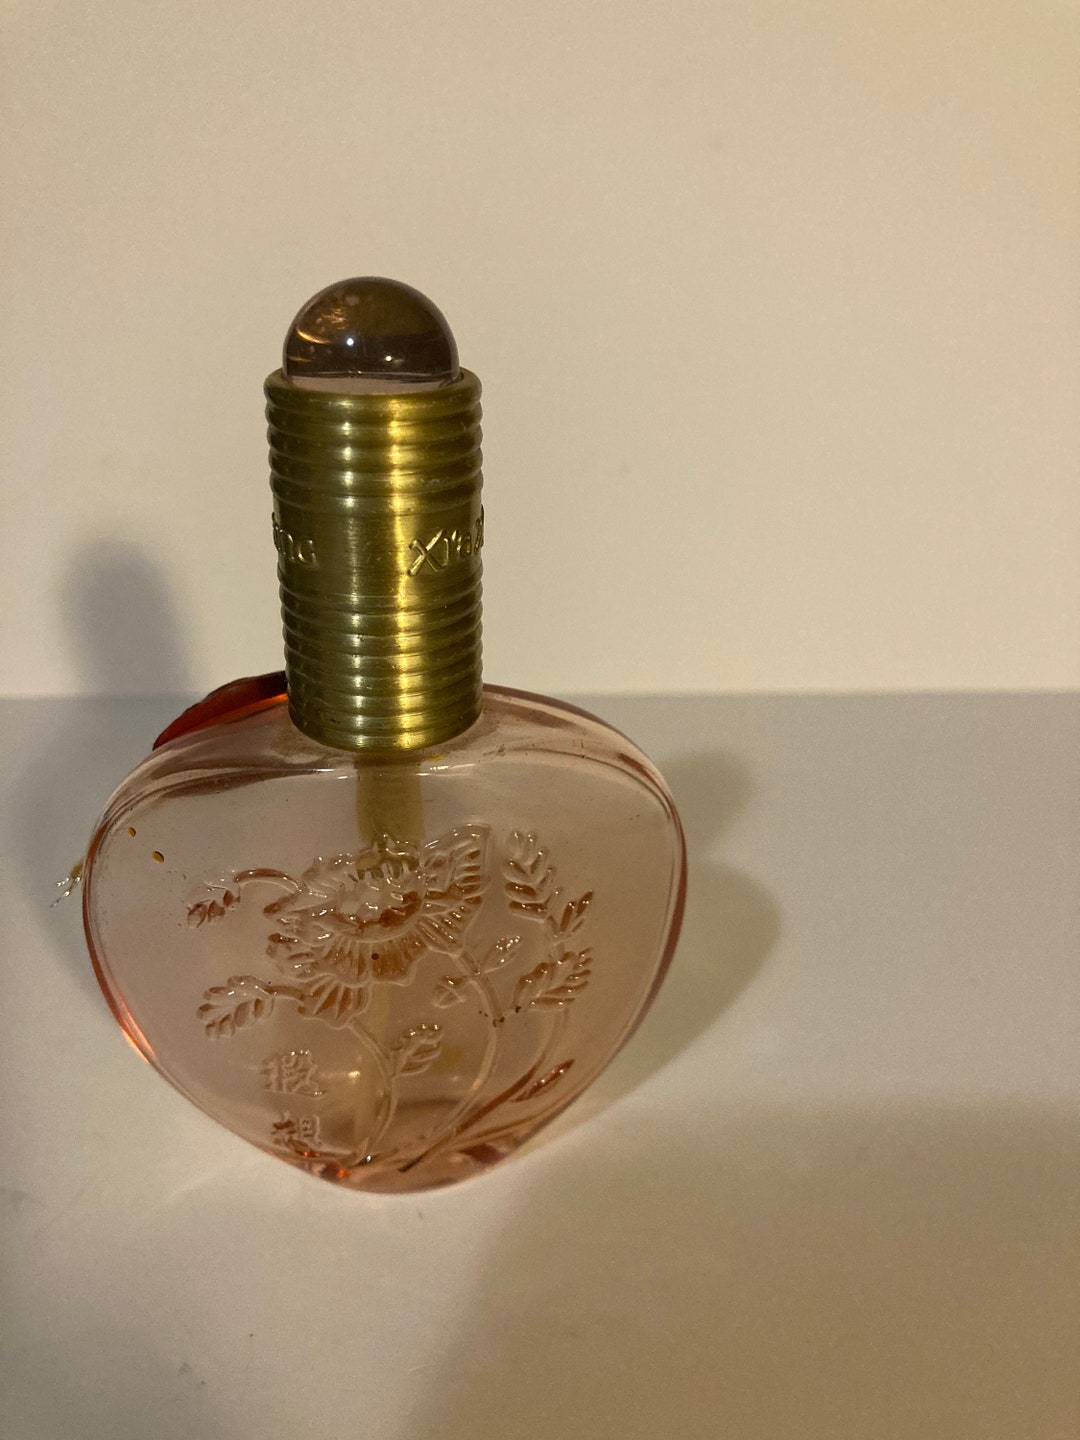 Xia Xiang Vintage Perfume Bottle - Etsy